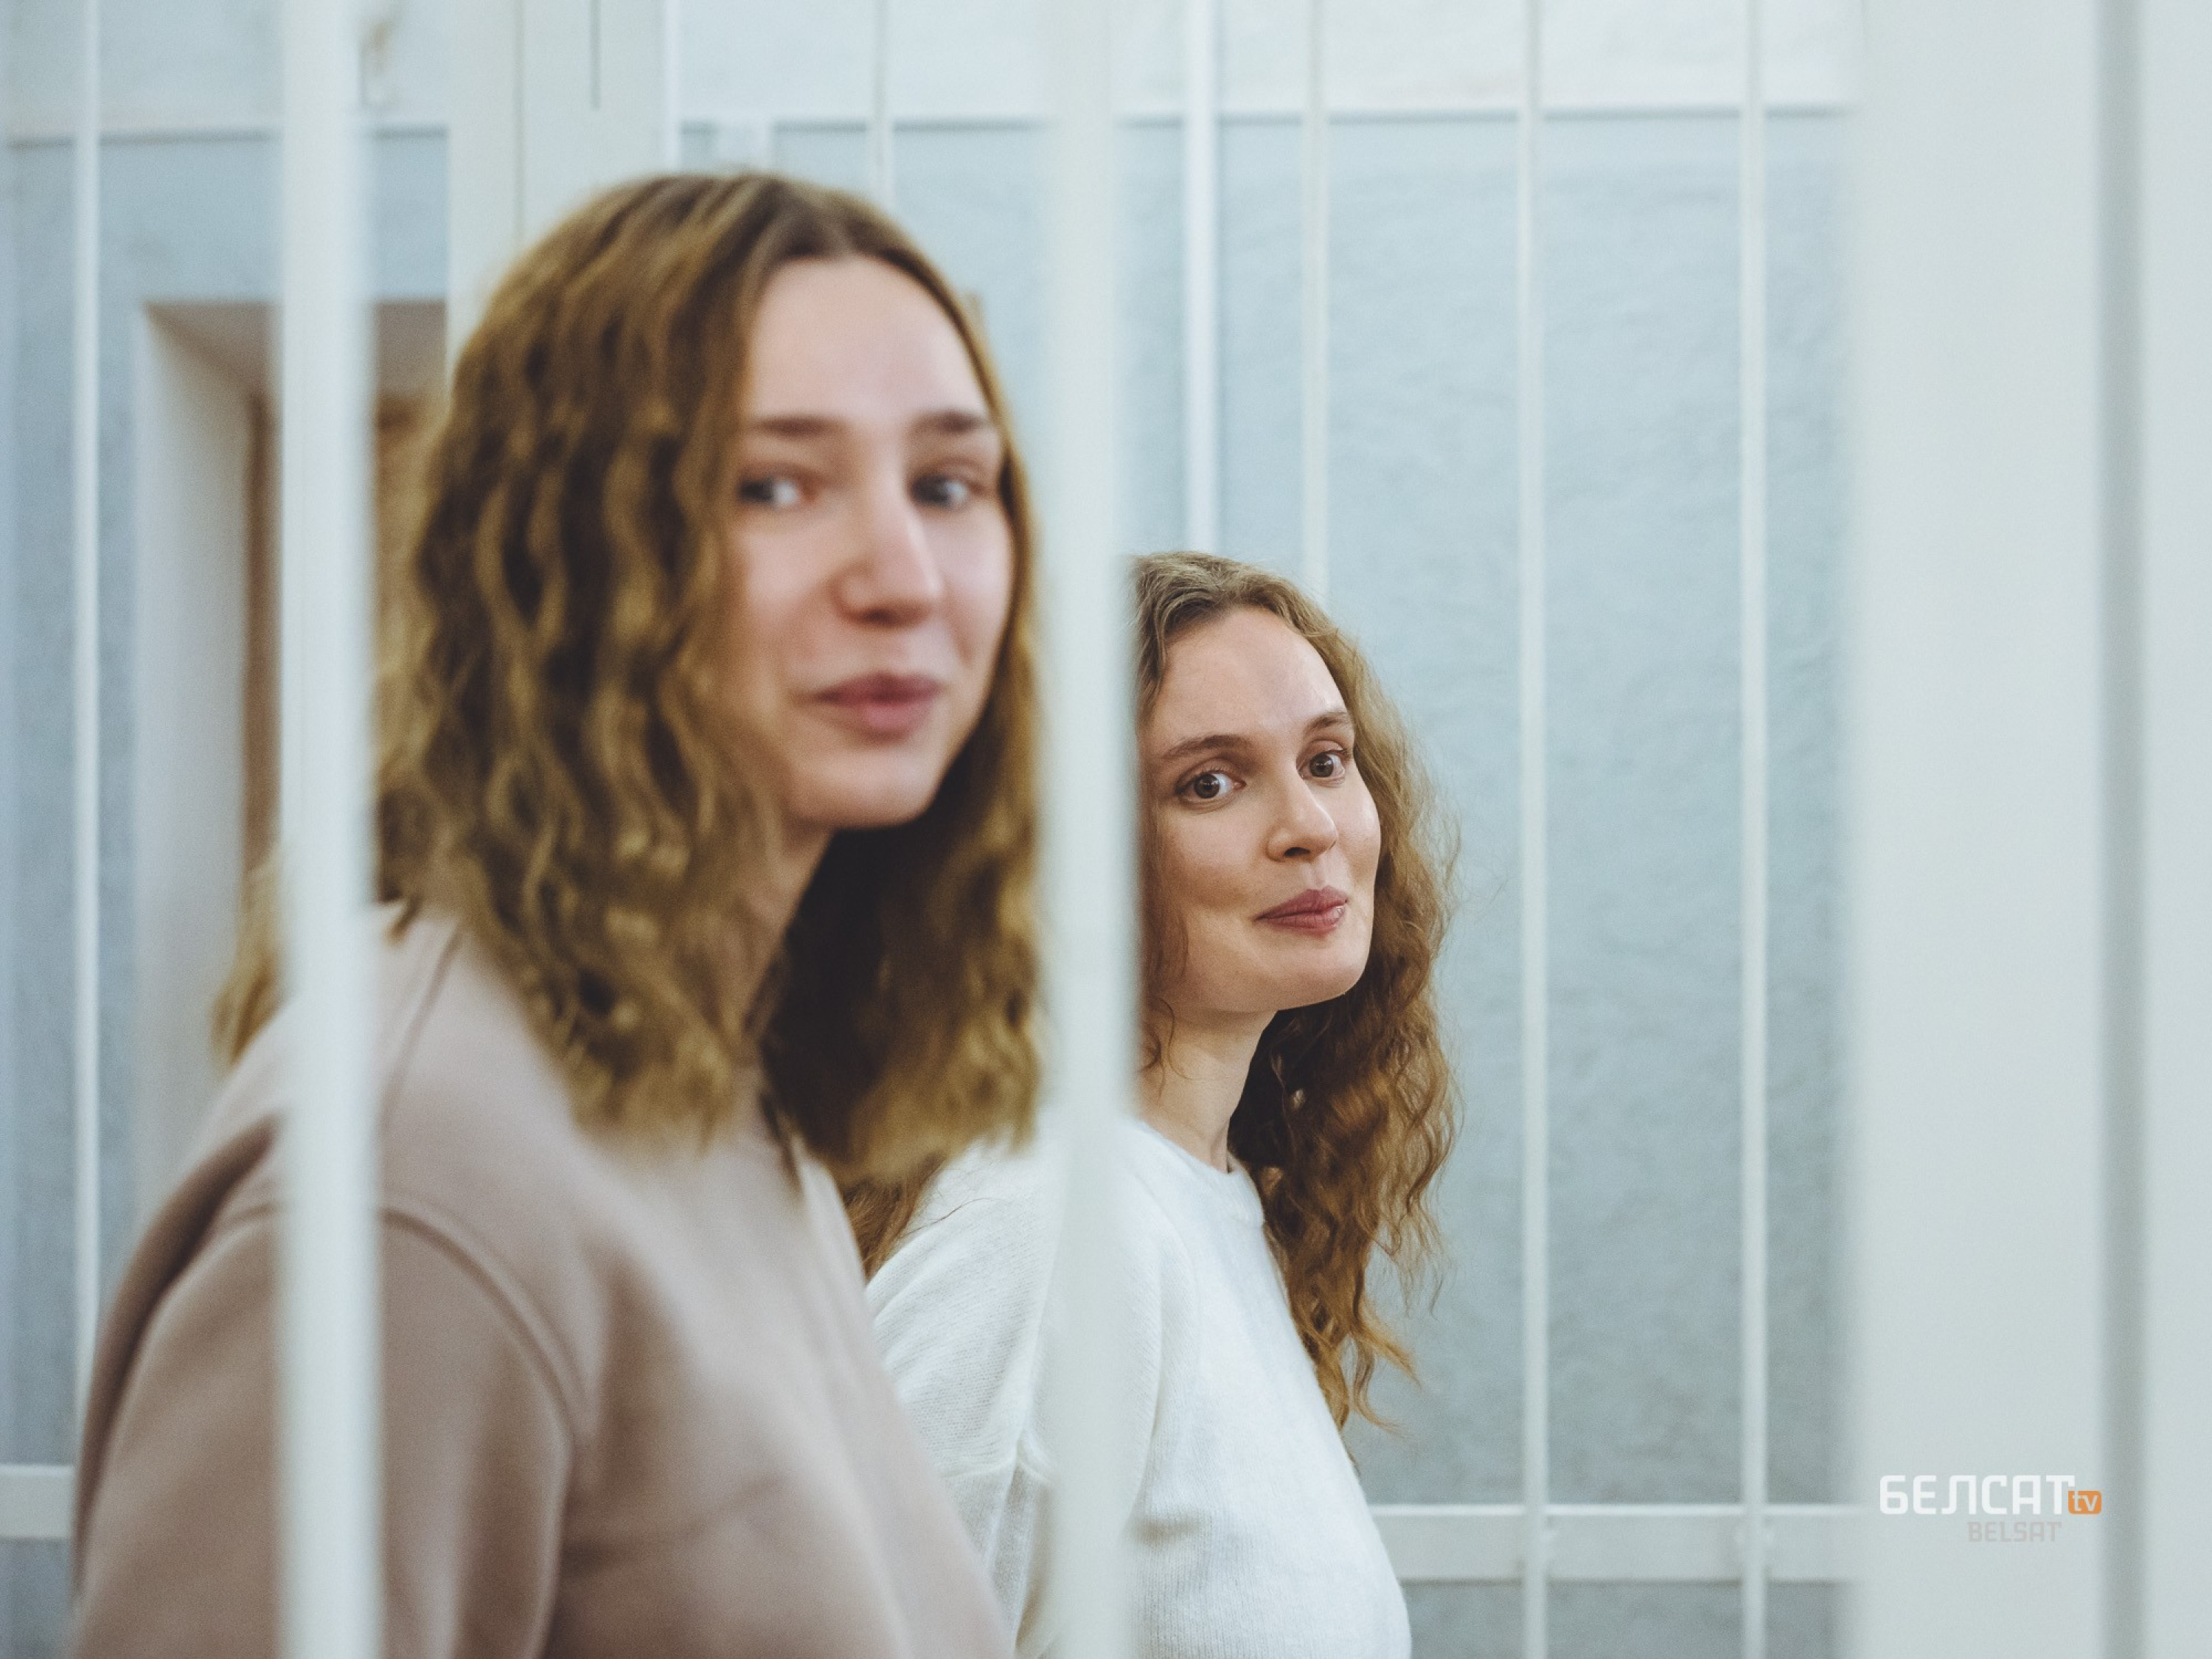 Belsat TV journalists Darya Chultsova and Katsiaryna Bakhvalava (Andreyeva) in court. Photo: belsat.eu